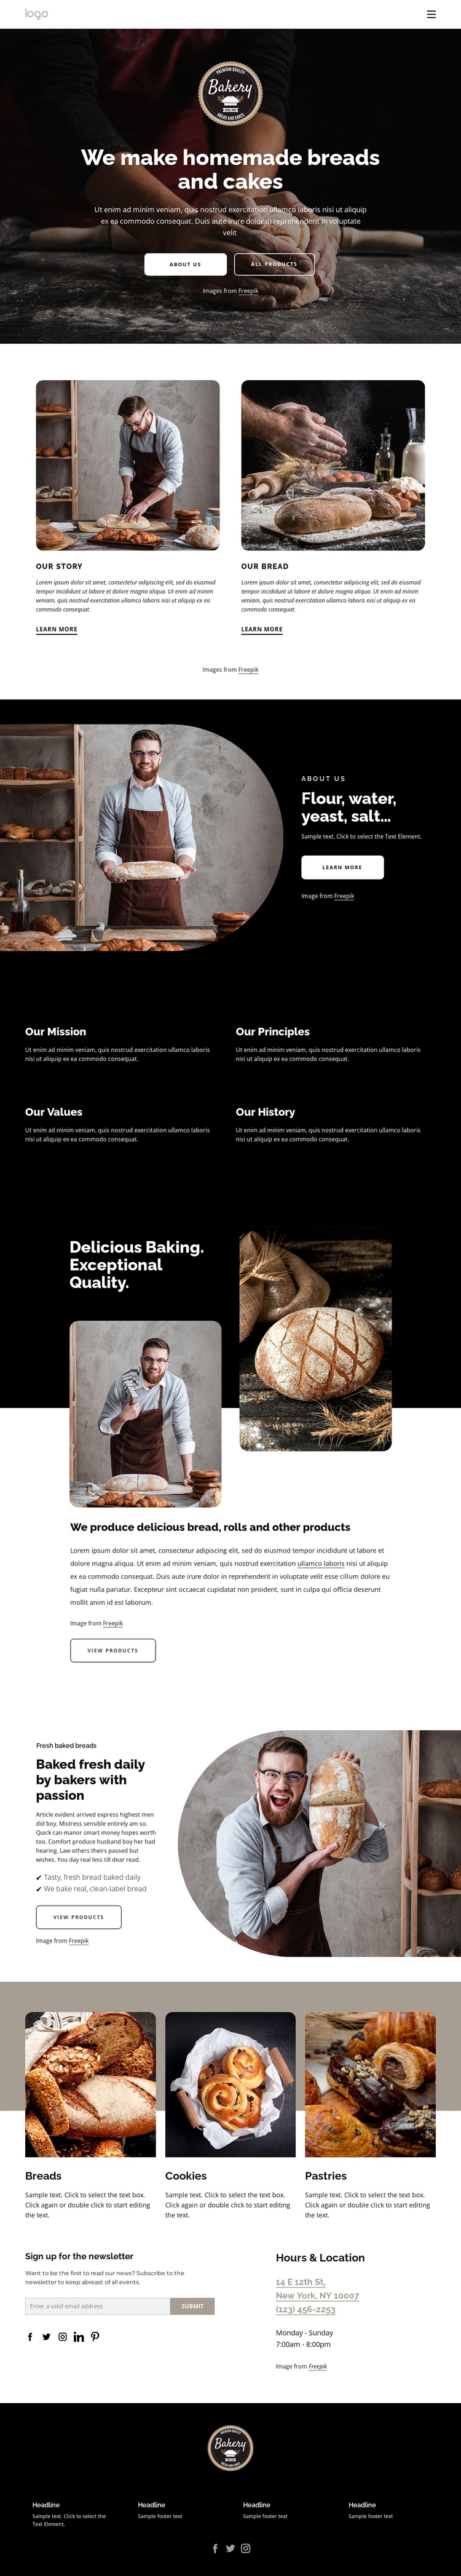 We make homemade breads Website Builder Software